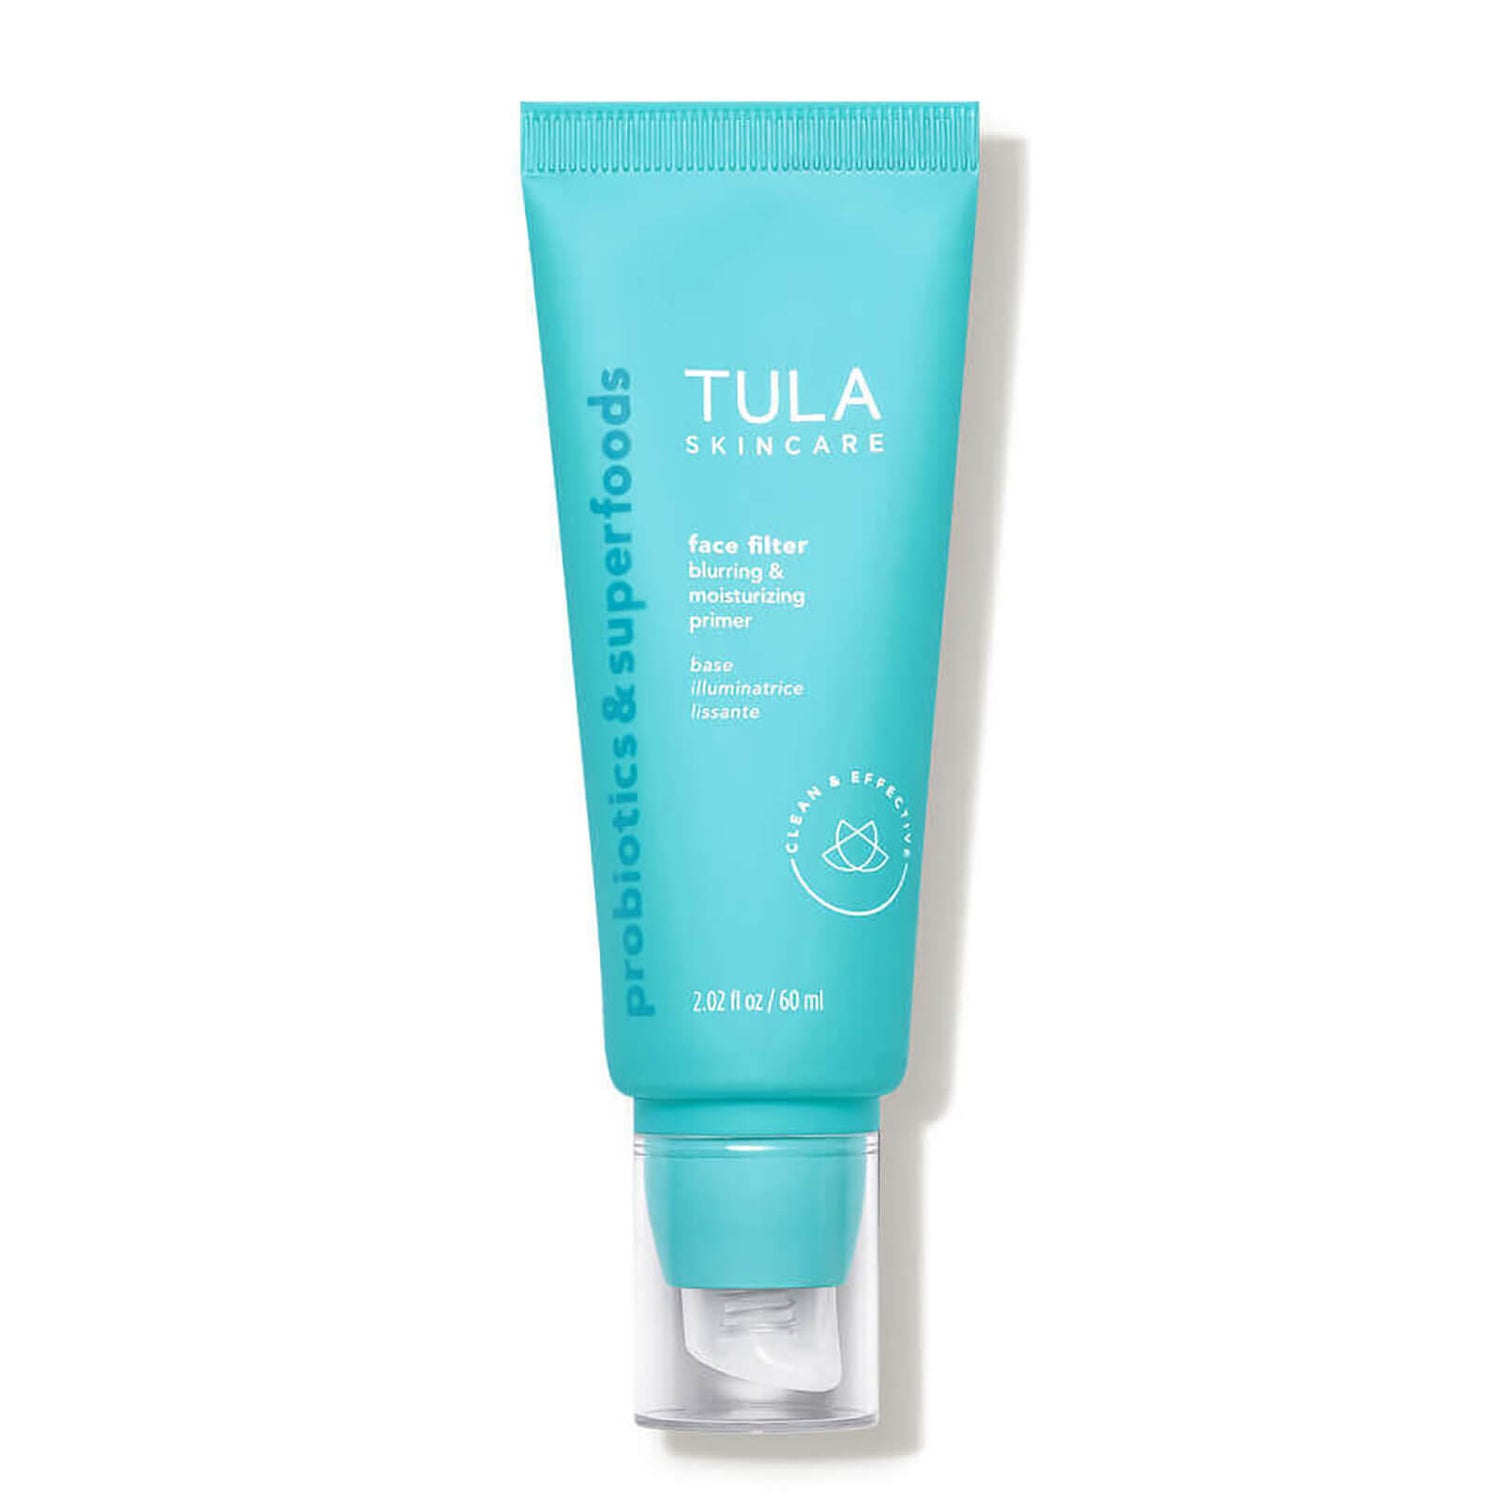 TULA Skincare Face Filter Blurring Moisturizing Primer - Supersize (2 fl. oz.)